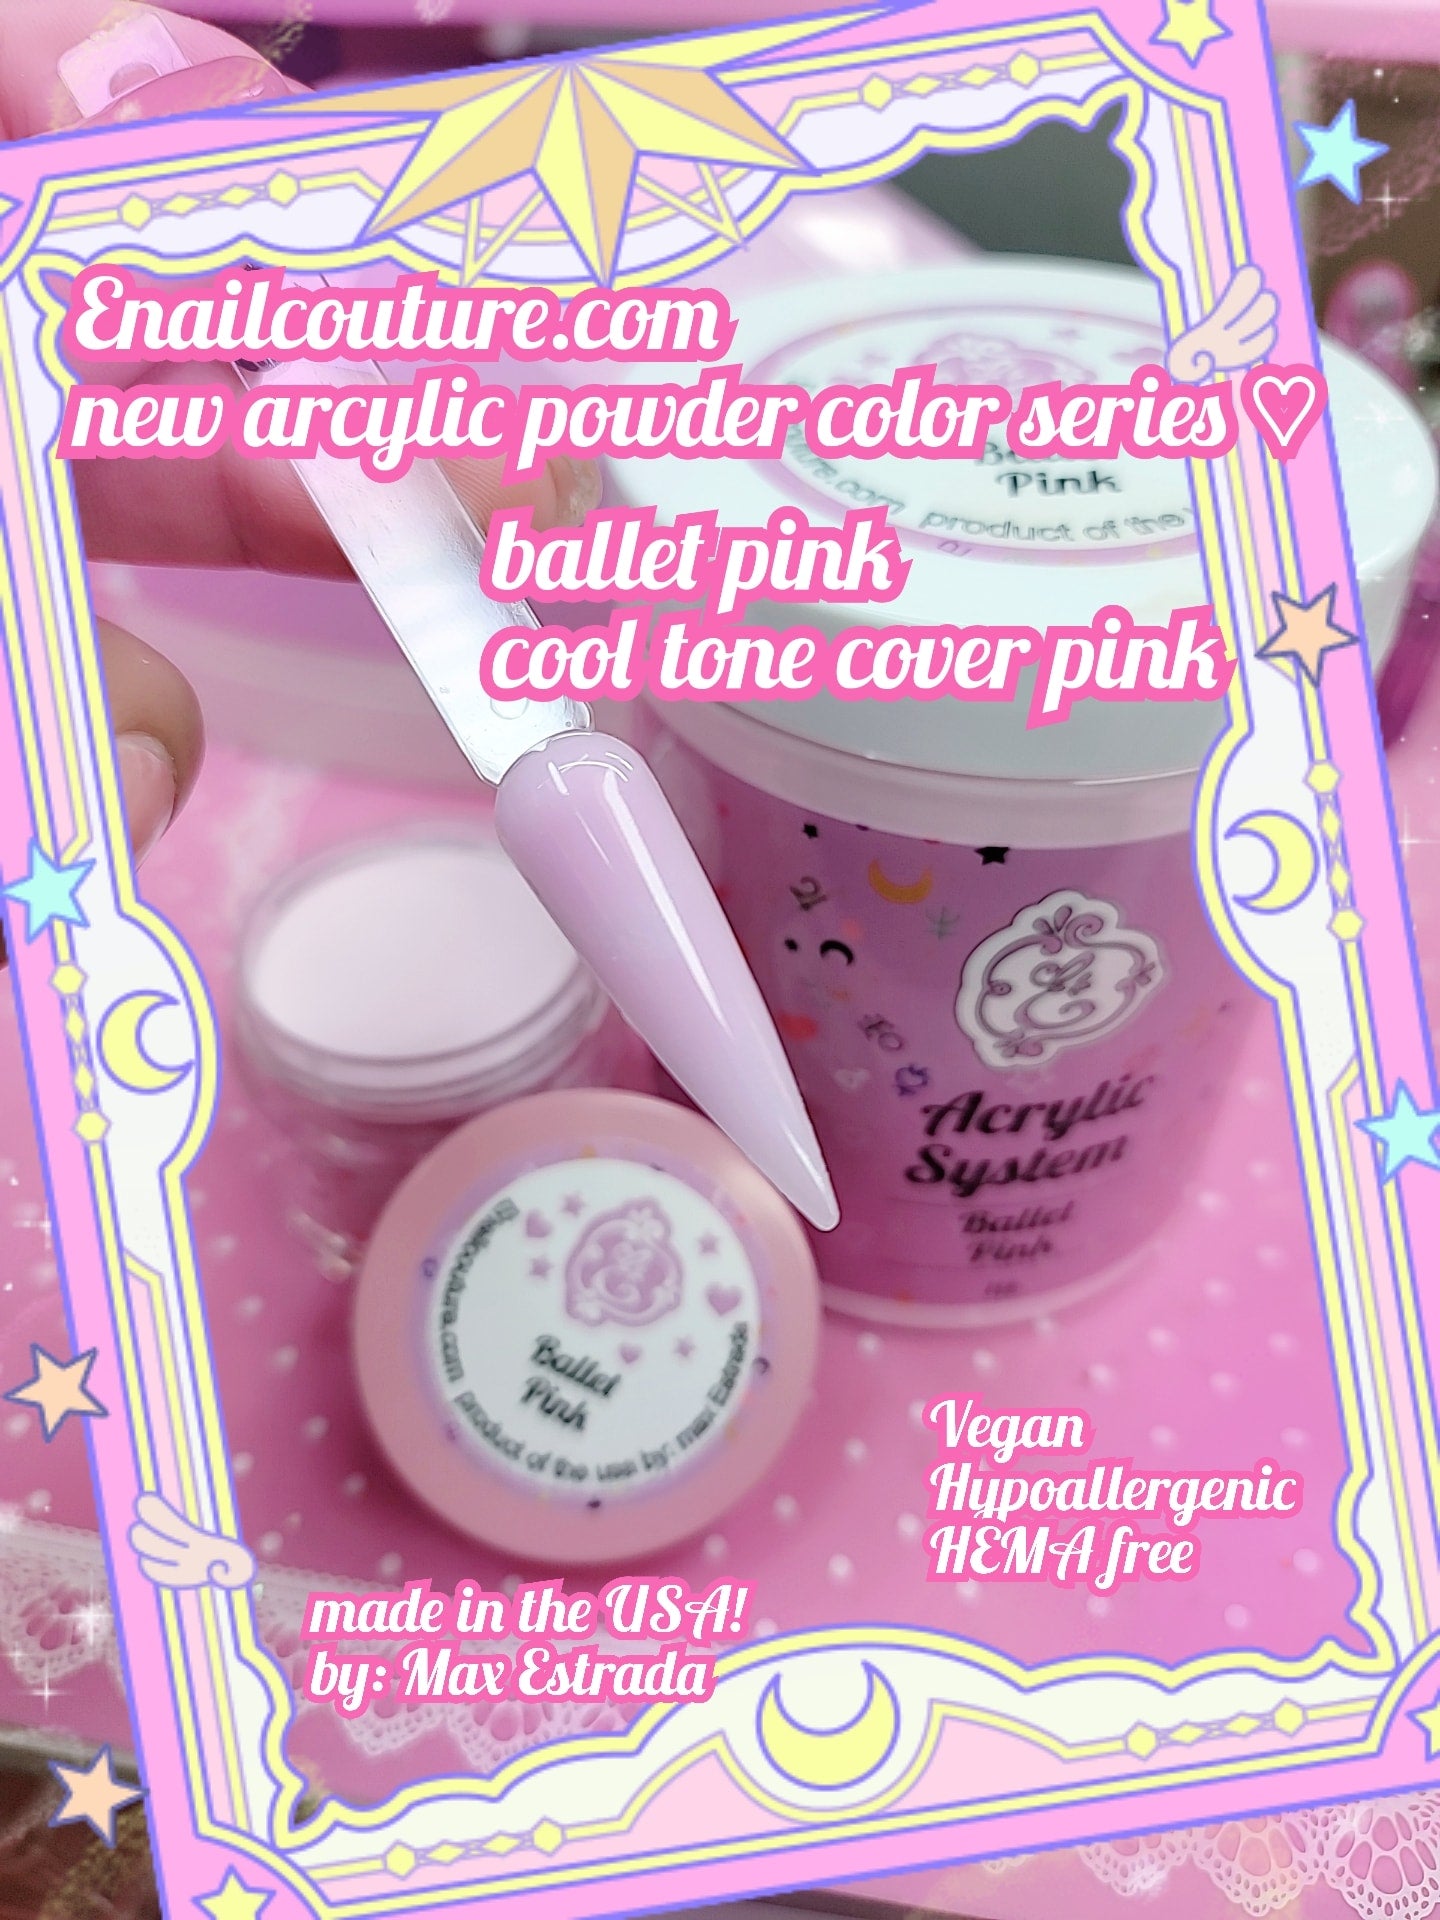 Ballet Pink (Nude Pink Acrylic Powder - Professional Acrylic Nail Powder Polymer Natural Nude Pink Colors Acrylic Nail Powder for Nail Extension Carving DIY Beginners Salon)